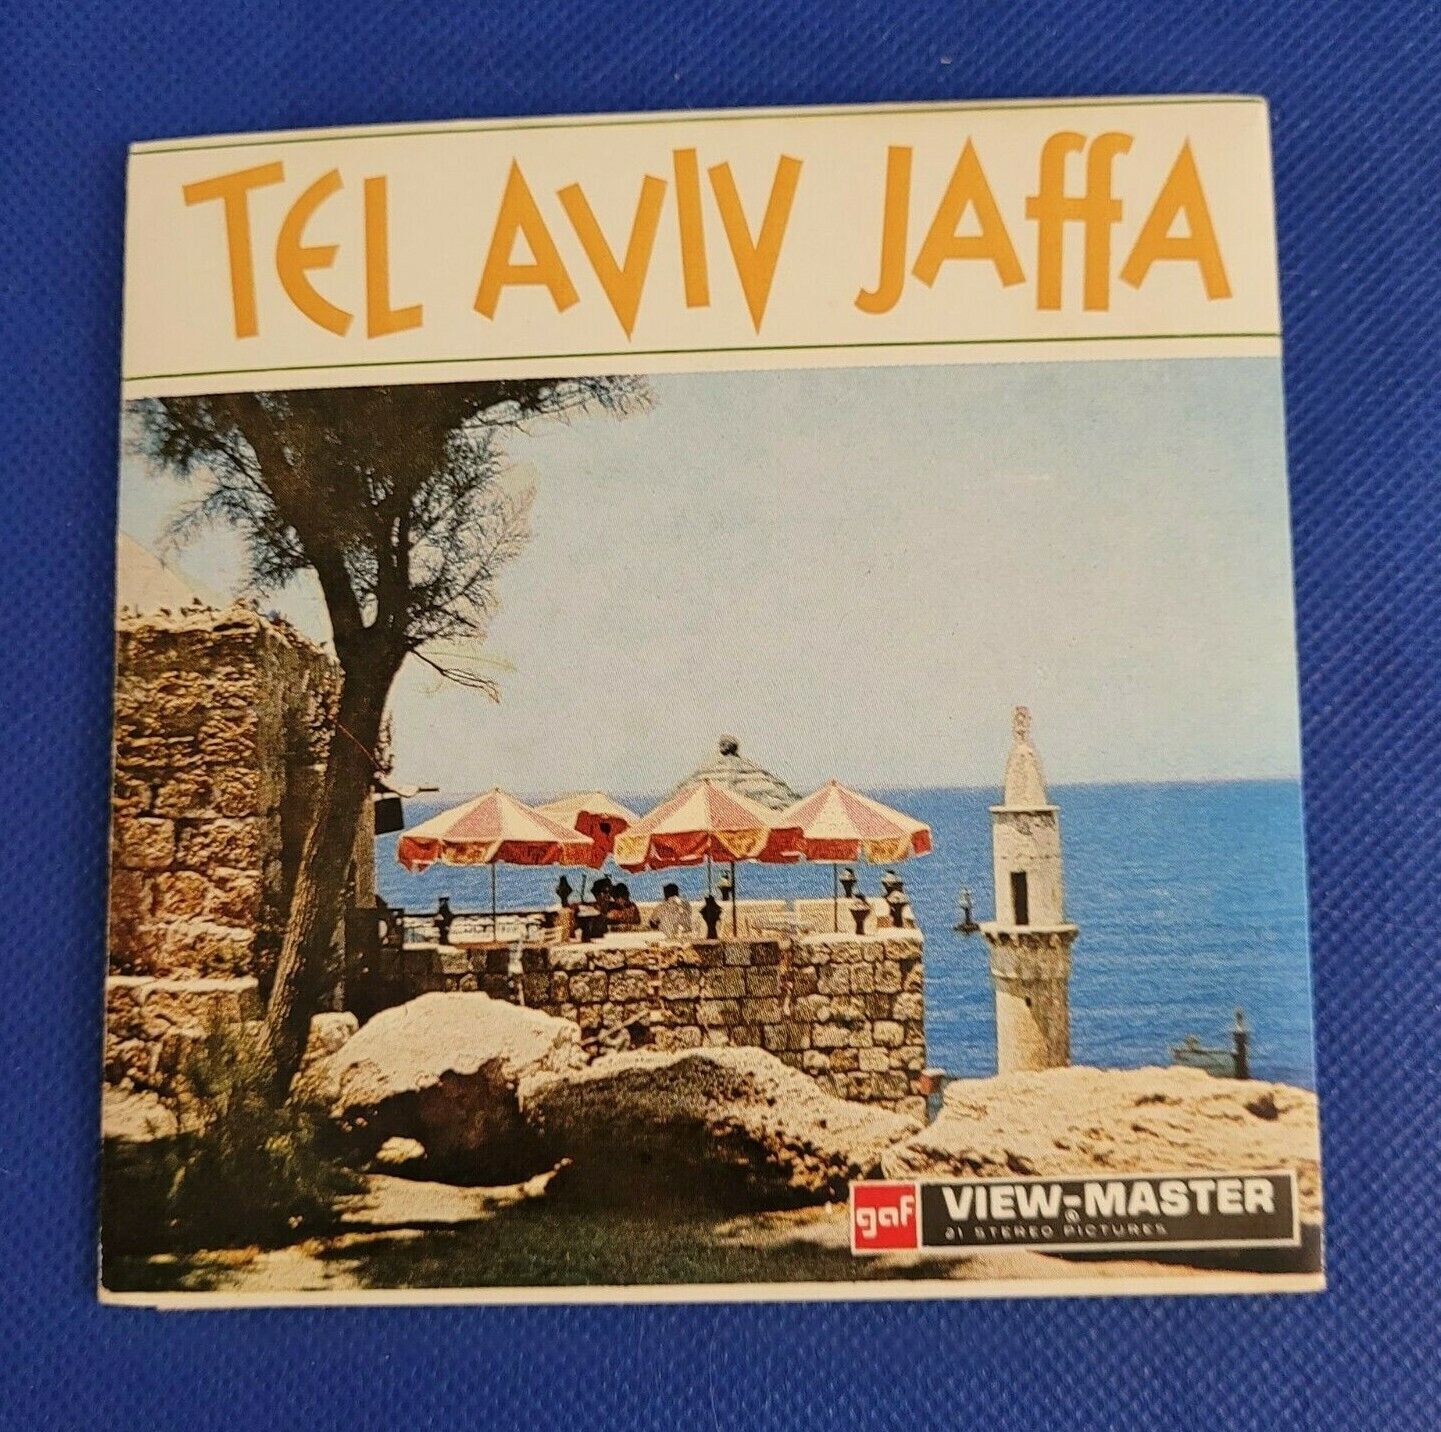 Vintage Rare Gaf C821 Tel-Aviv Jaffa Israel view-master 3 Reels Folder Packet